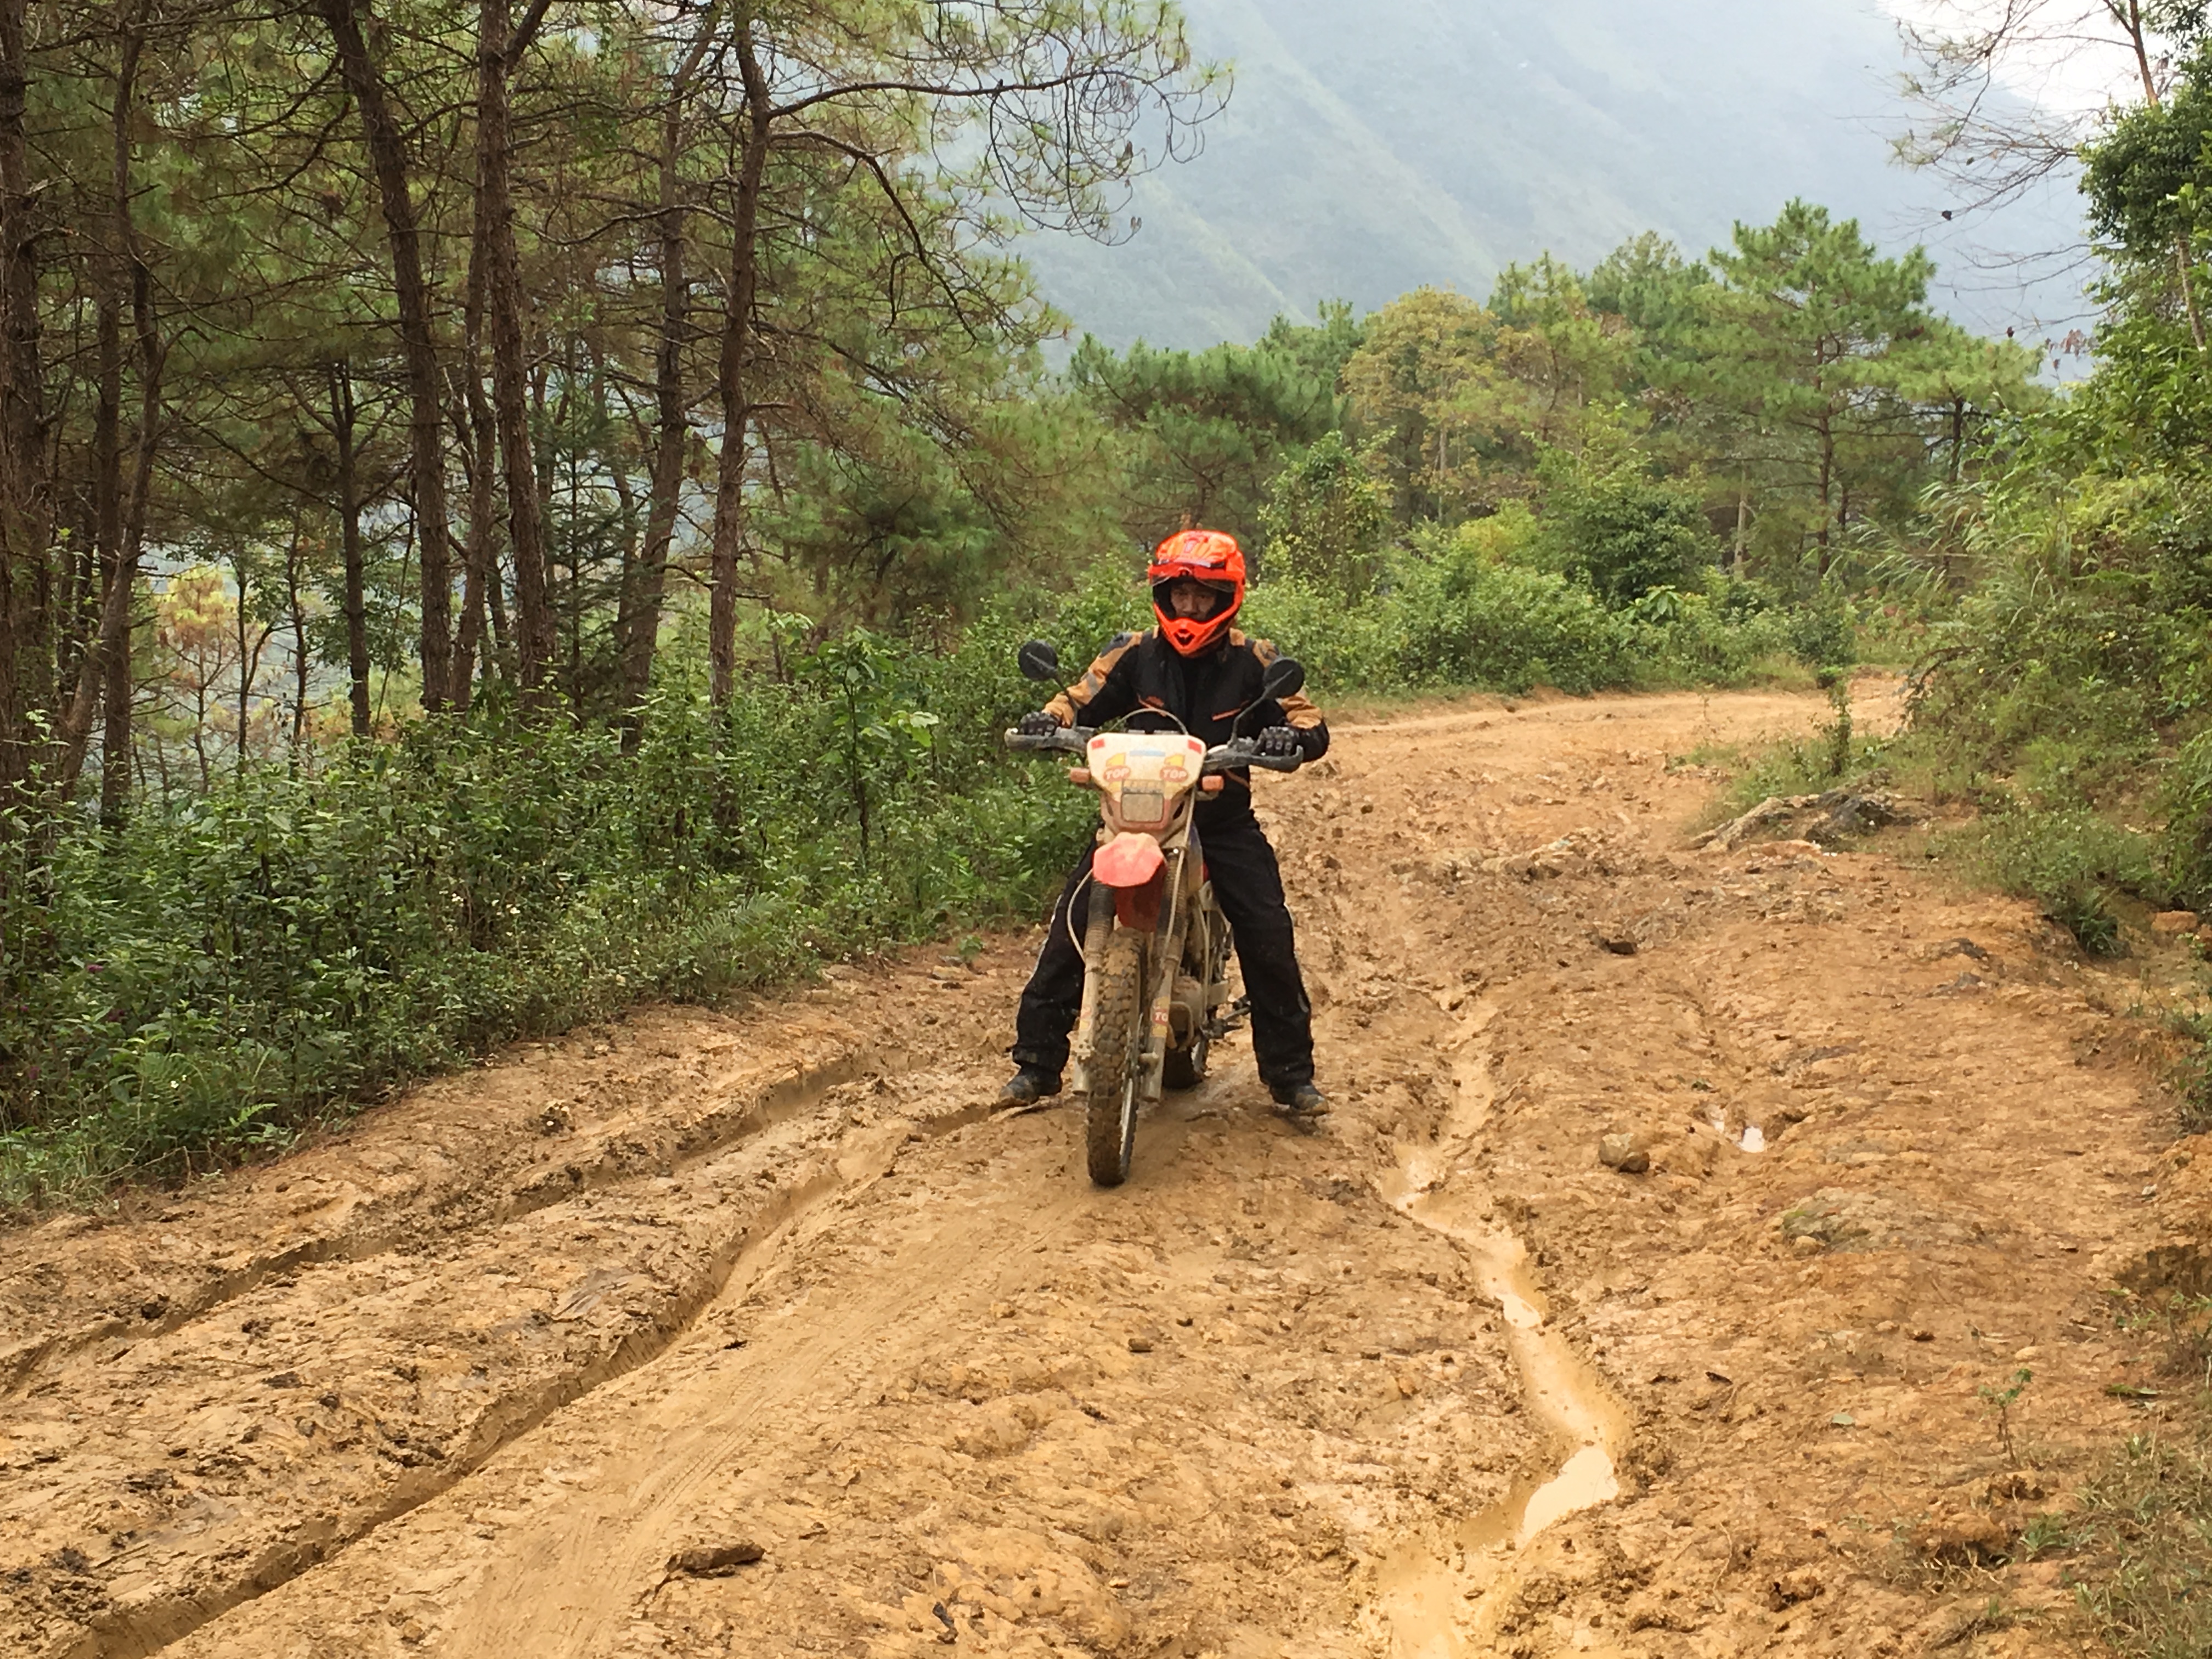 vietnam motorcycle tour